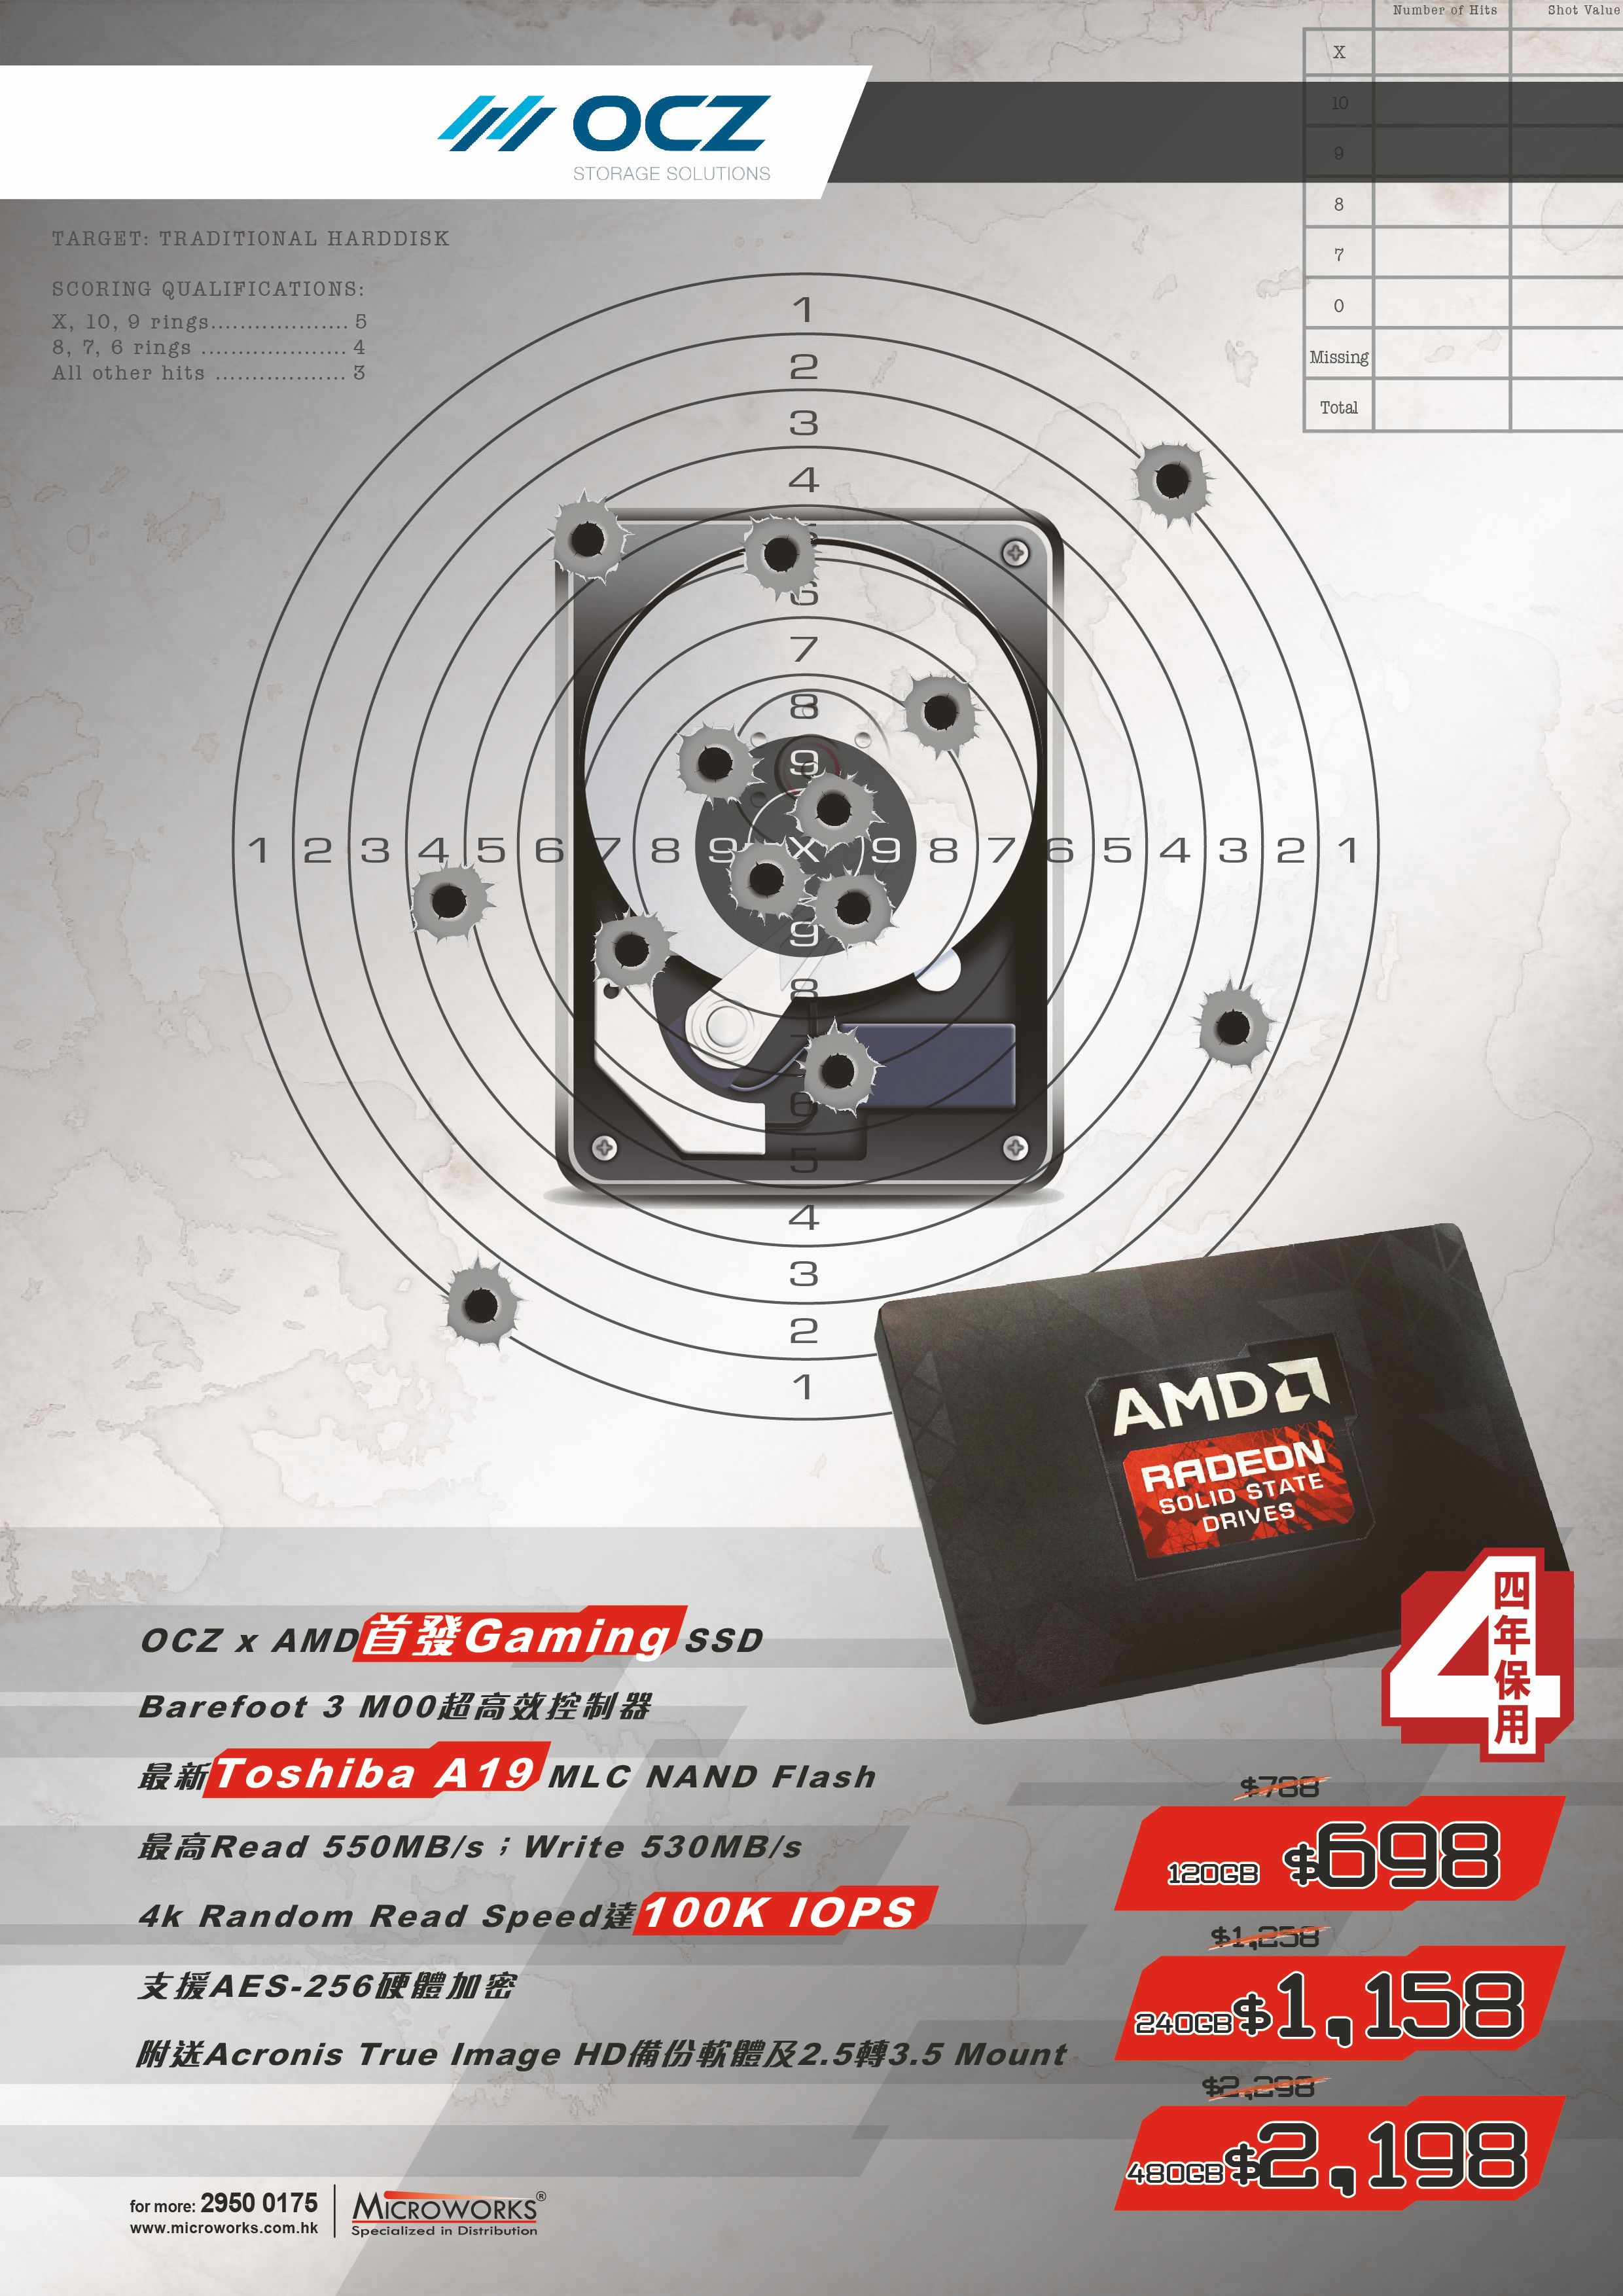 AMD OCZ SSD